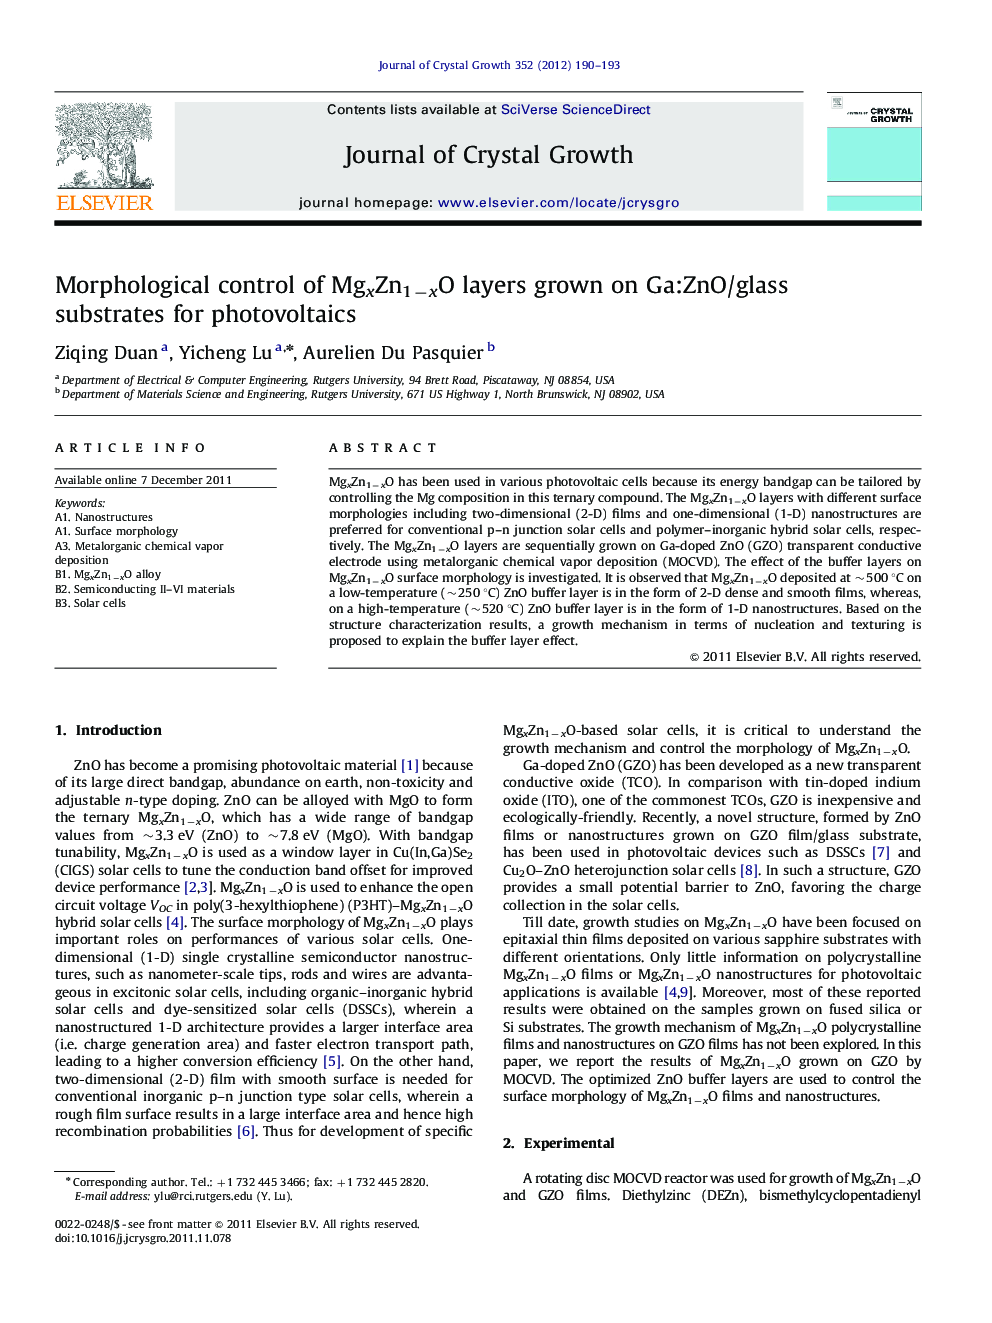 Morphological control of MgxZn1−xO layers grown on Ga:ZnO/glass substrates for photovoltaics